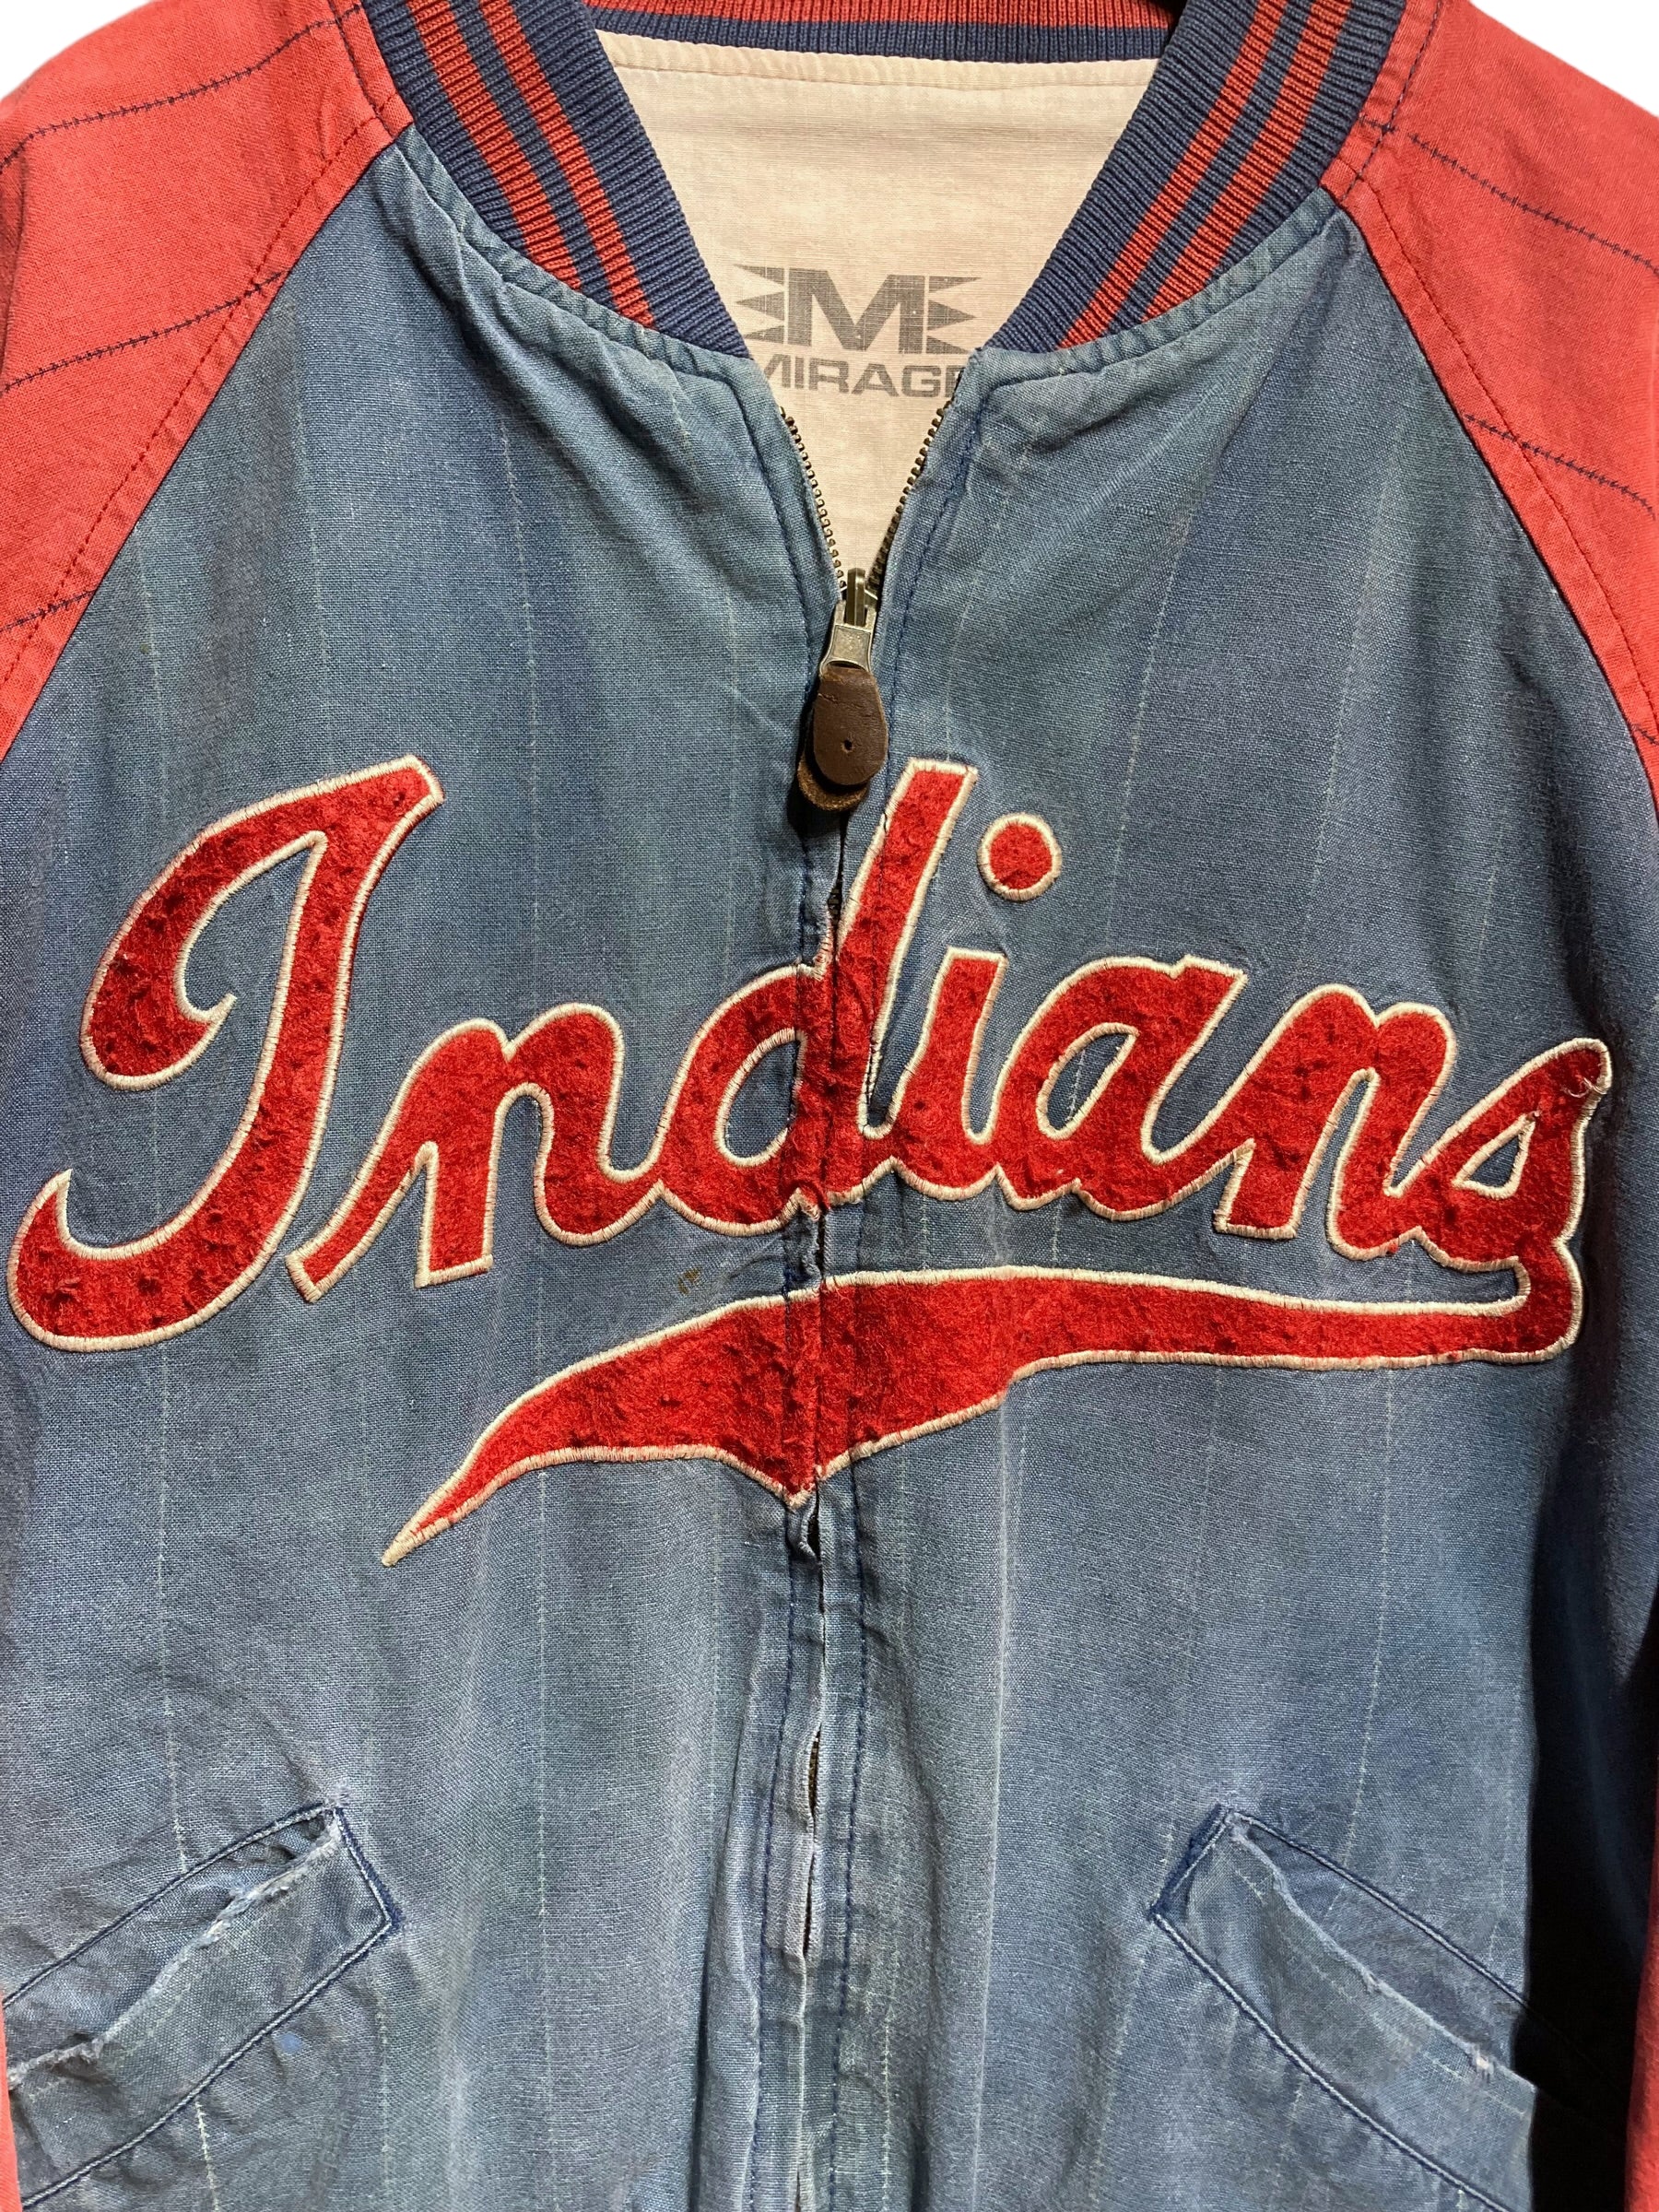 MIRAGE 90s stadium jacket スタジアムジャケット MLB Indians ...